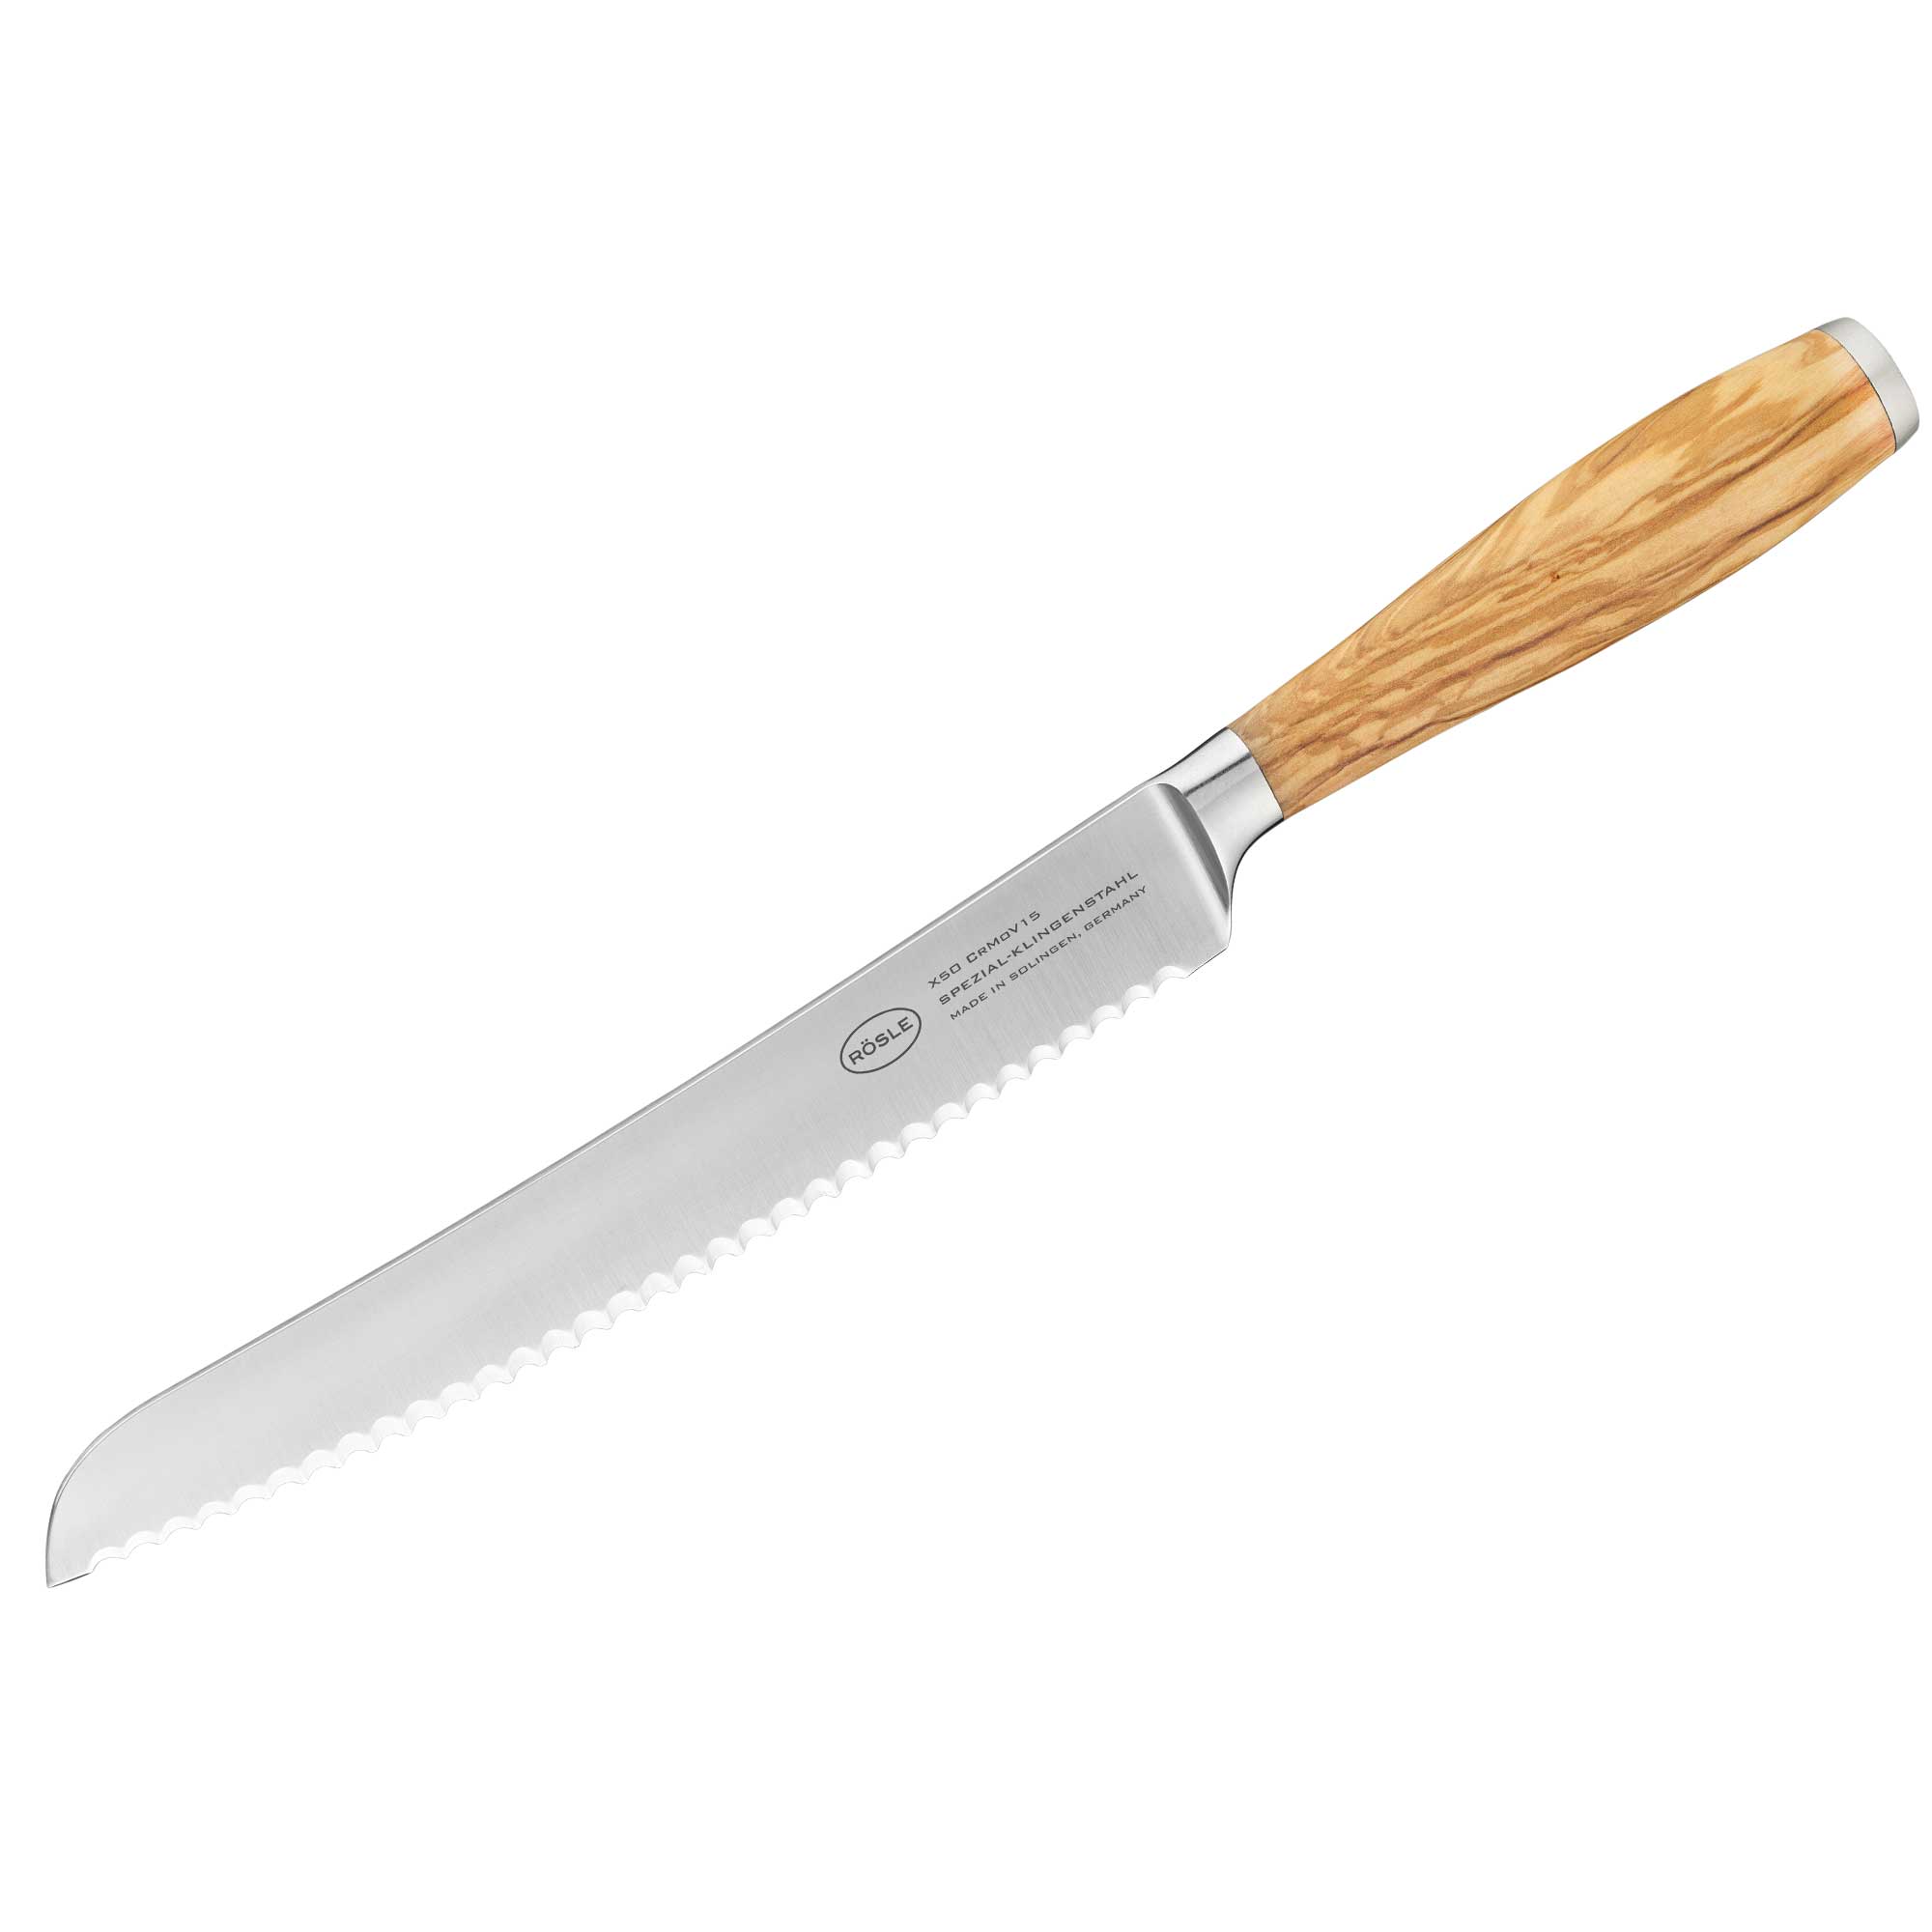 Bread knife serrated Artesano 22 cm | 8.5 in.